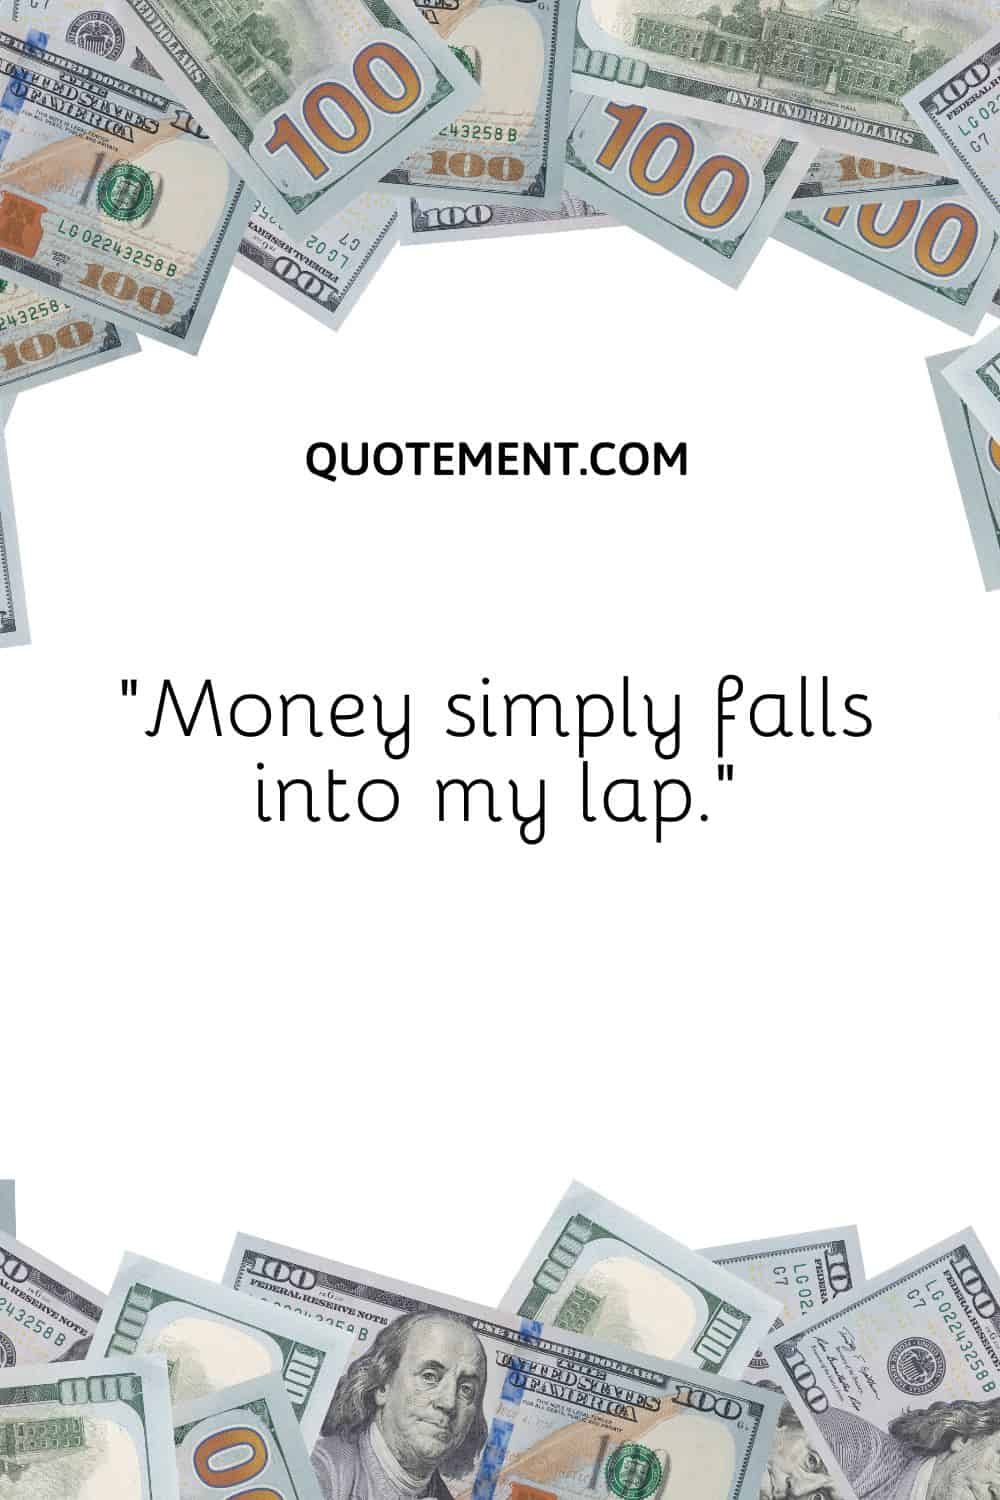 “Money simply falls into my lap.”